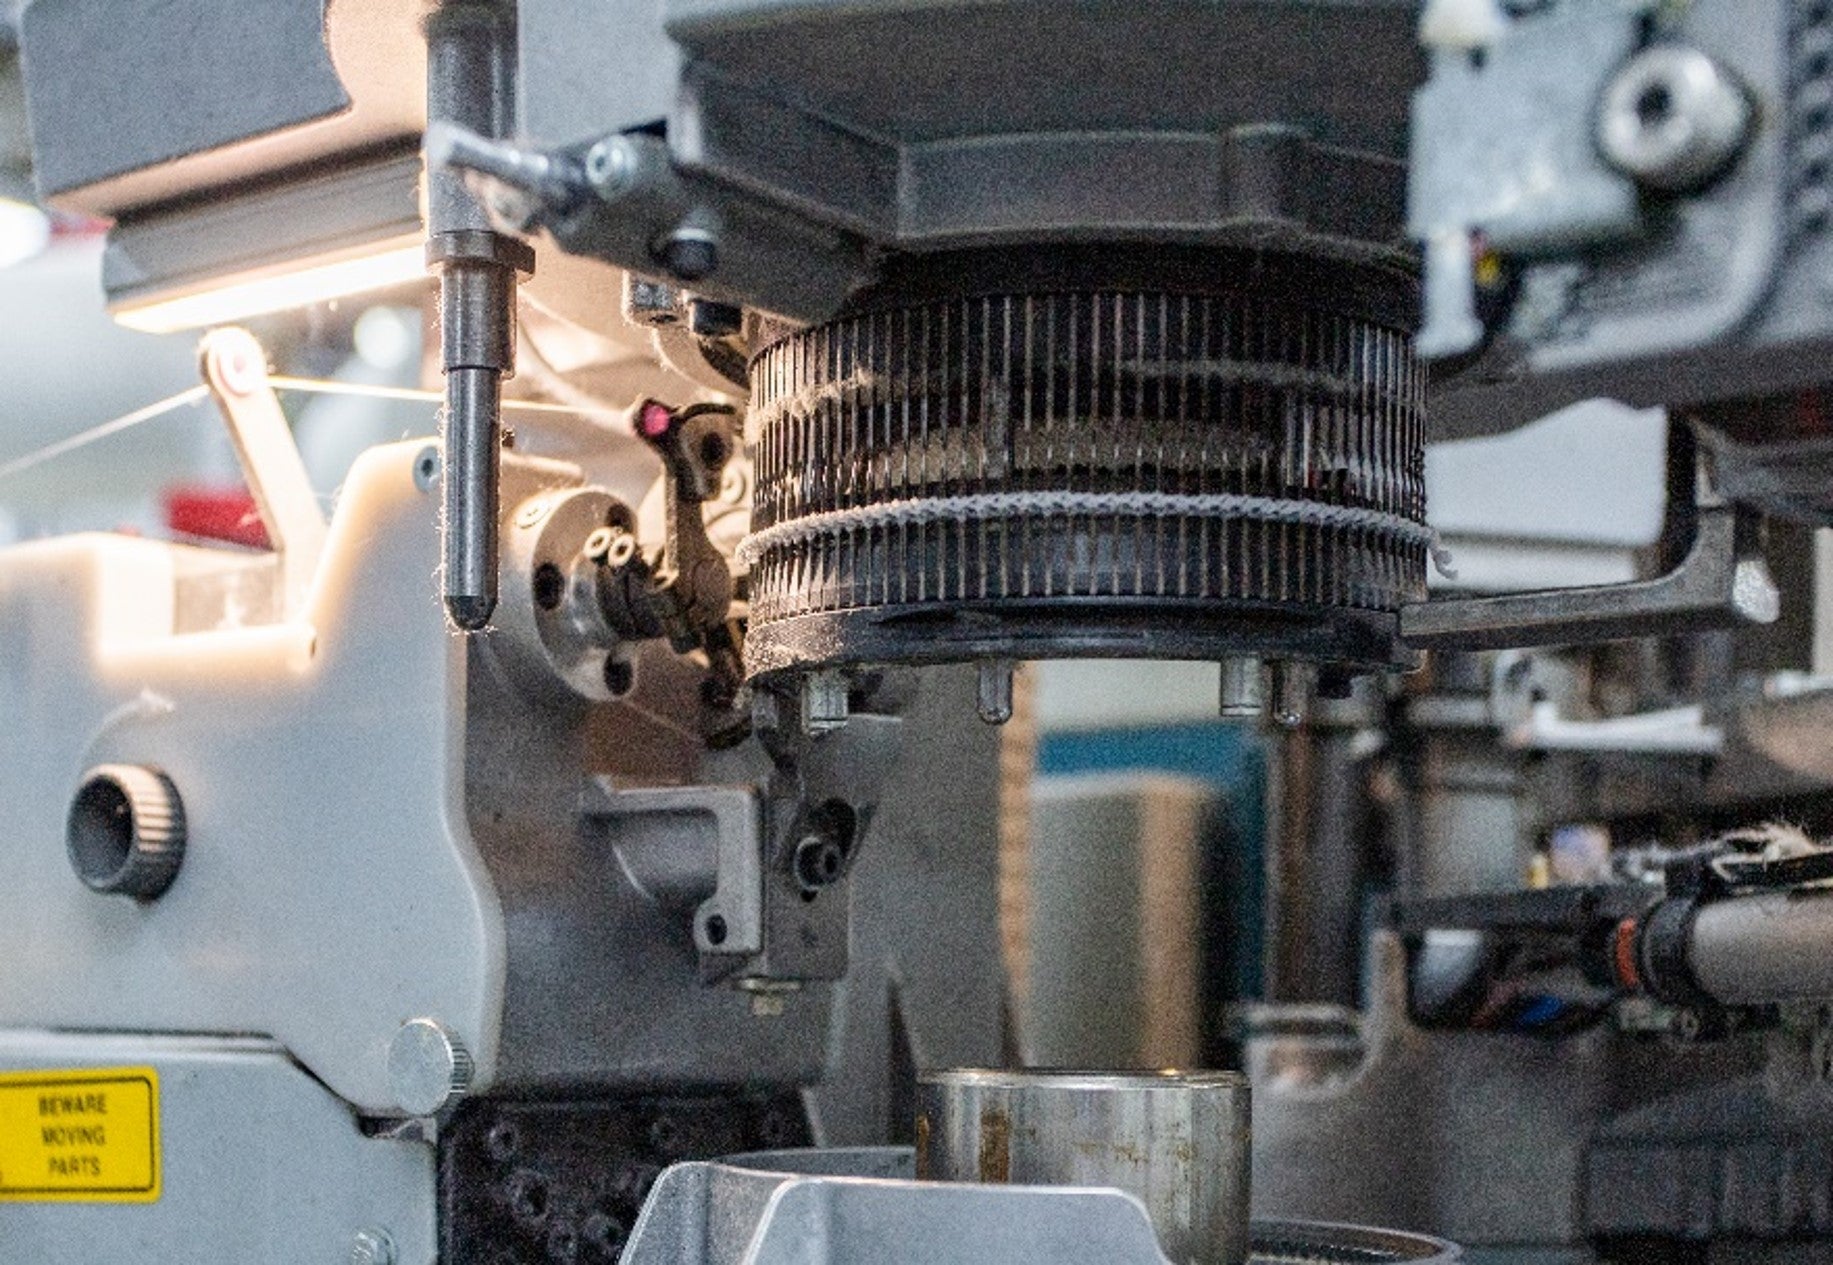 Close up photo of a knitting machine creating a seamless toe closure.